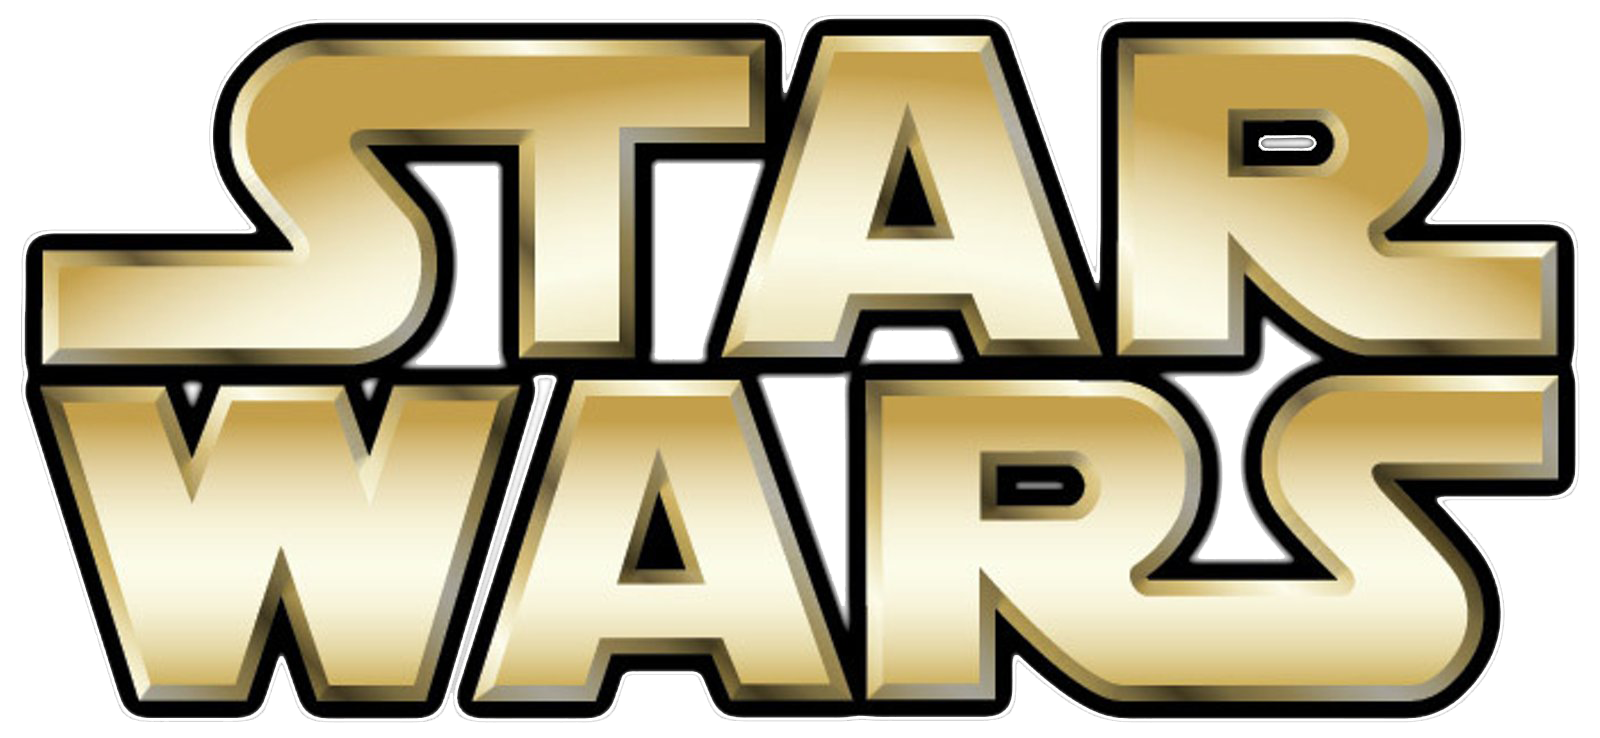 LEGO Star Wars Classic logo.p